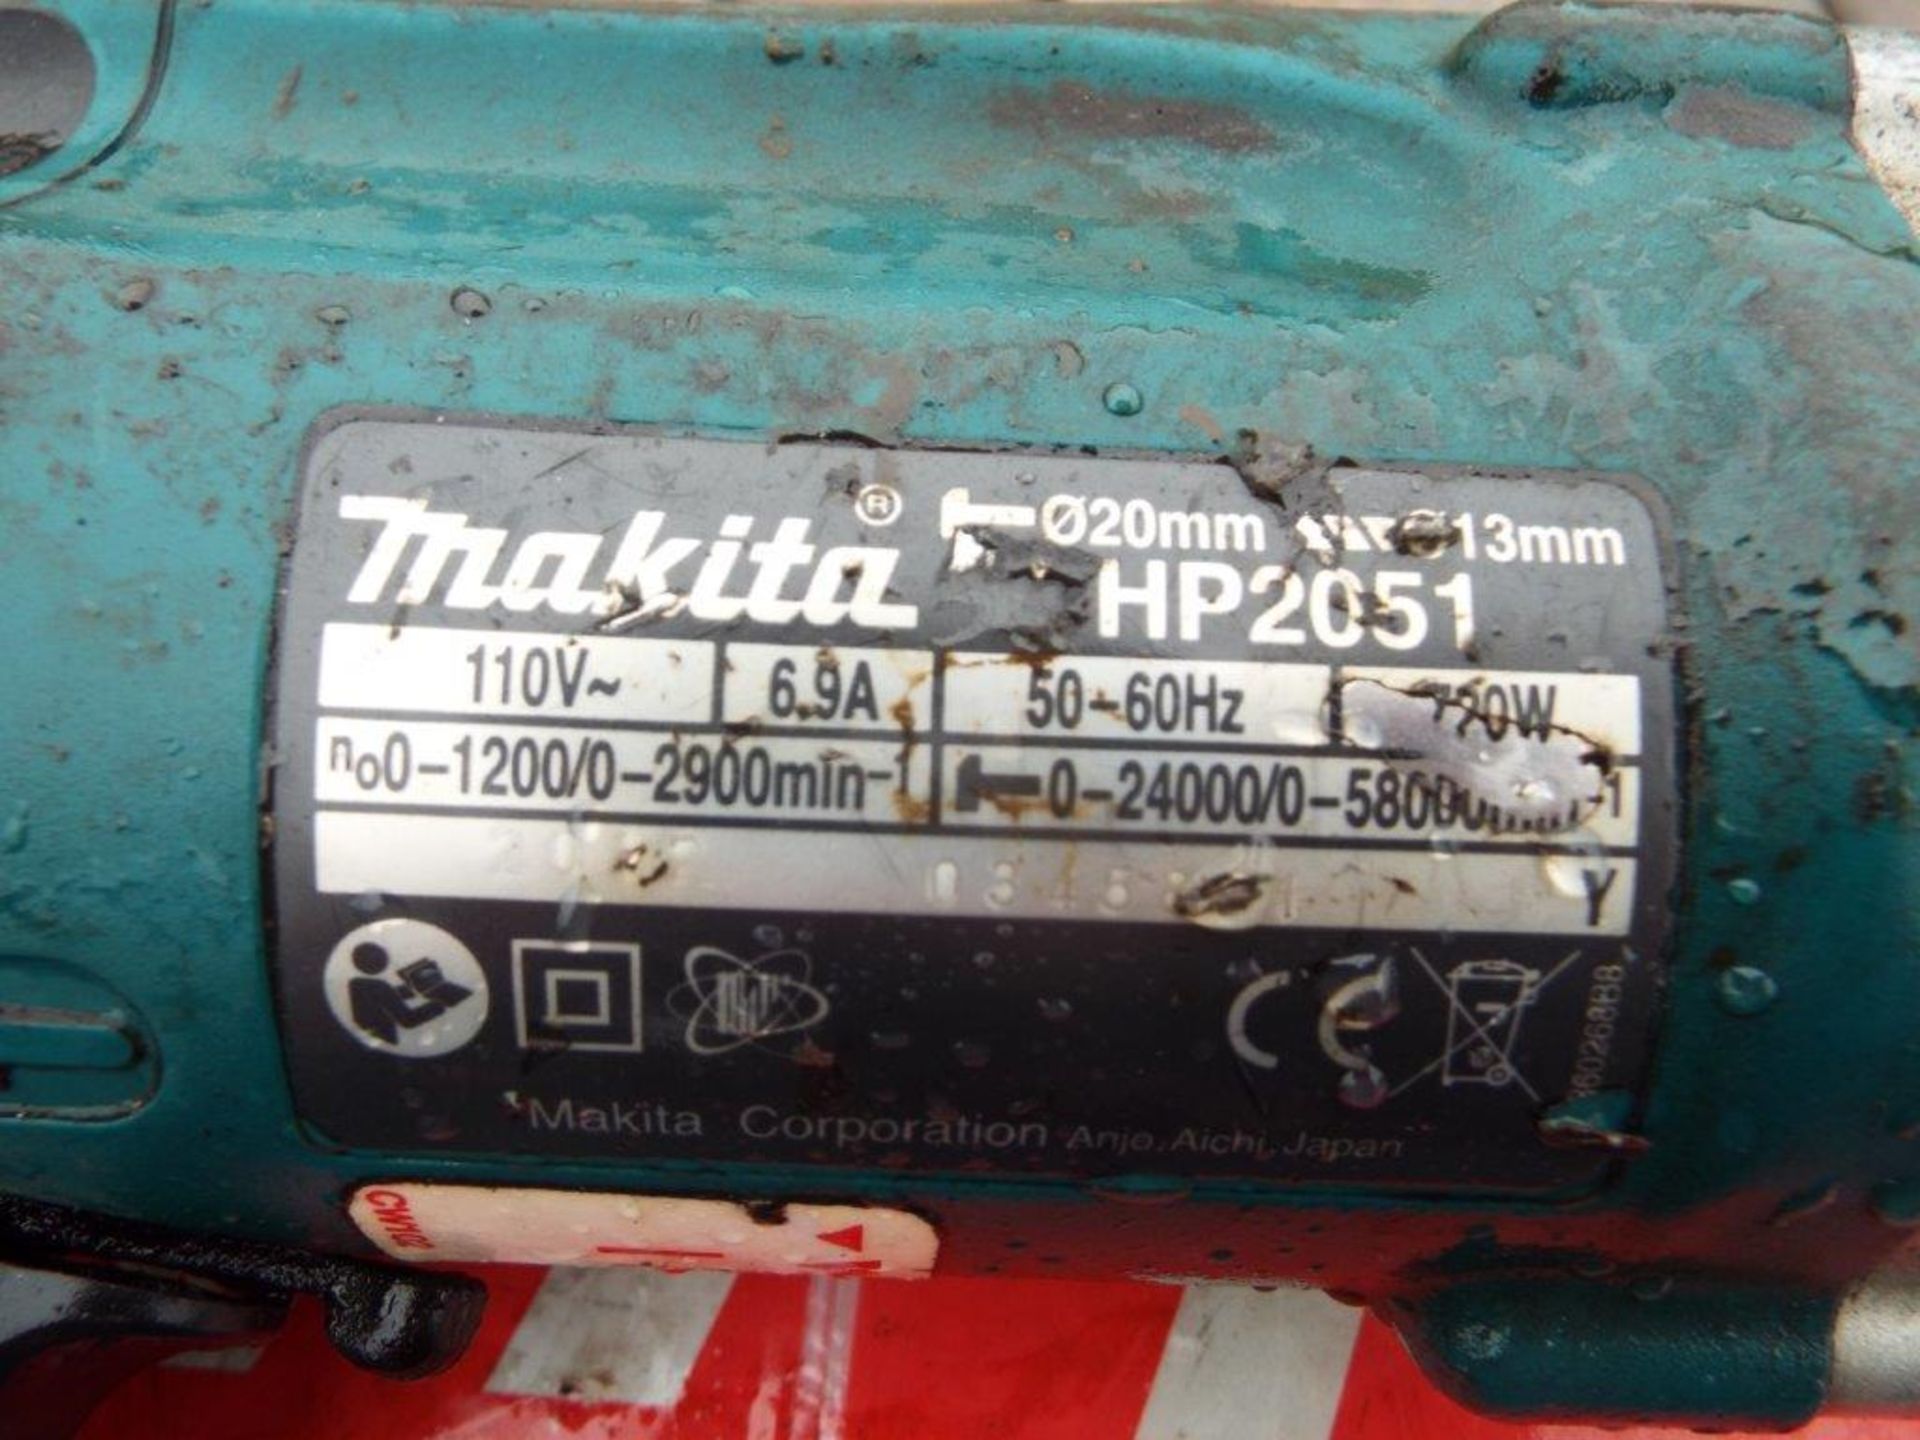 3 x Makita/Bosch Power Drills - Image 5 of 8